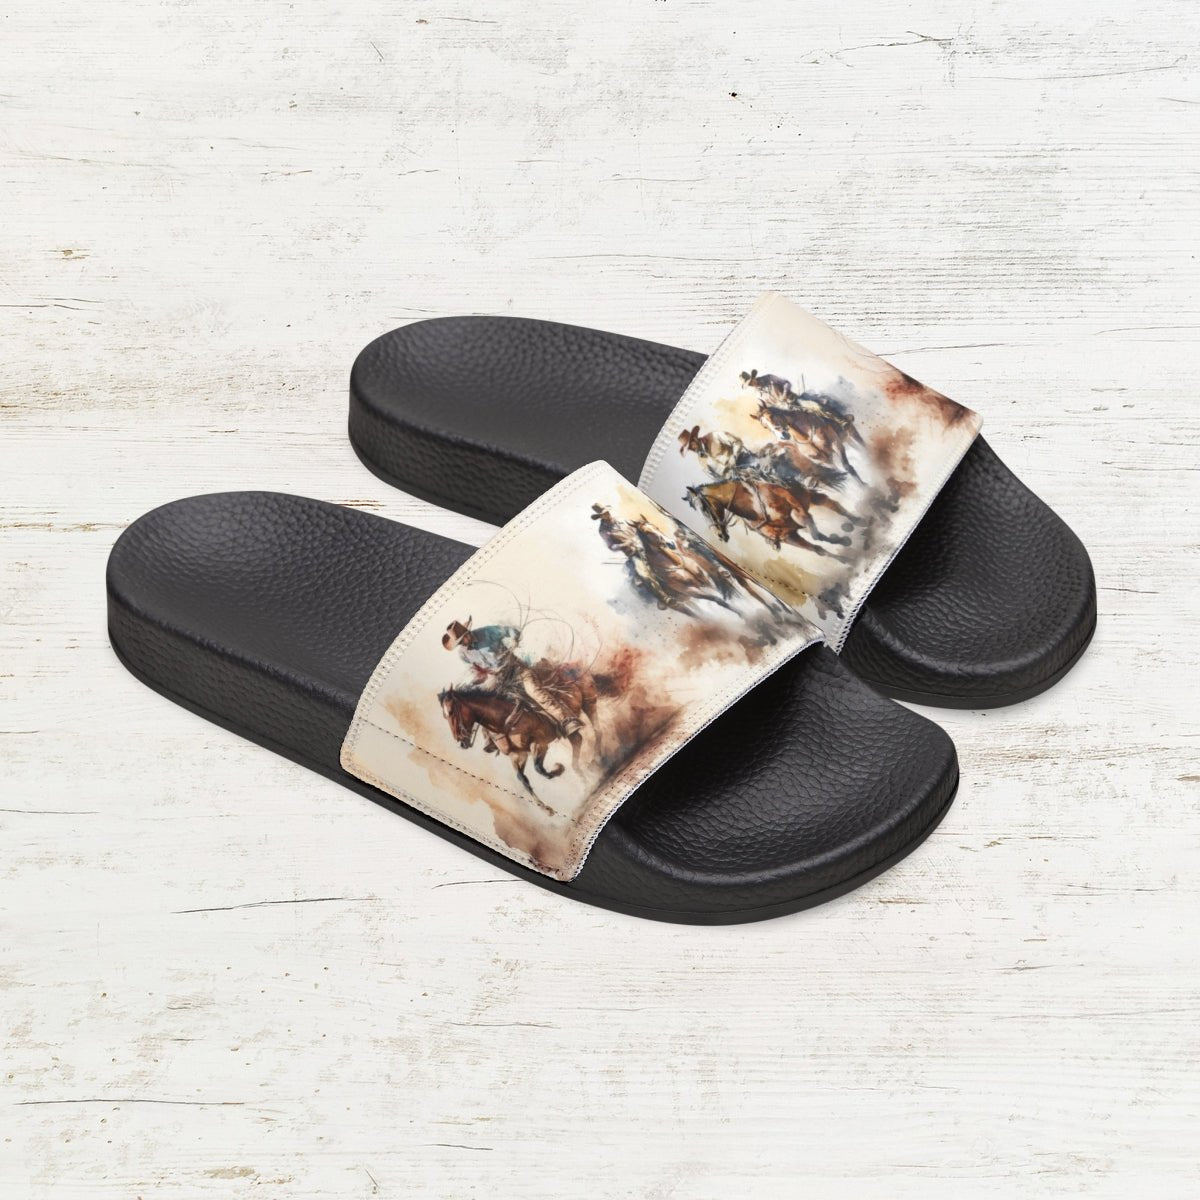 Cowboys & Horses PU Slip-on Sandals, Adult / Youth Sizes, Western Style Shoes - FlooredByArt